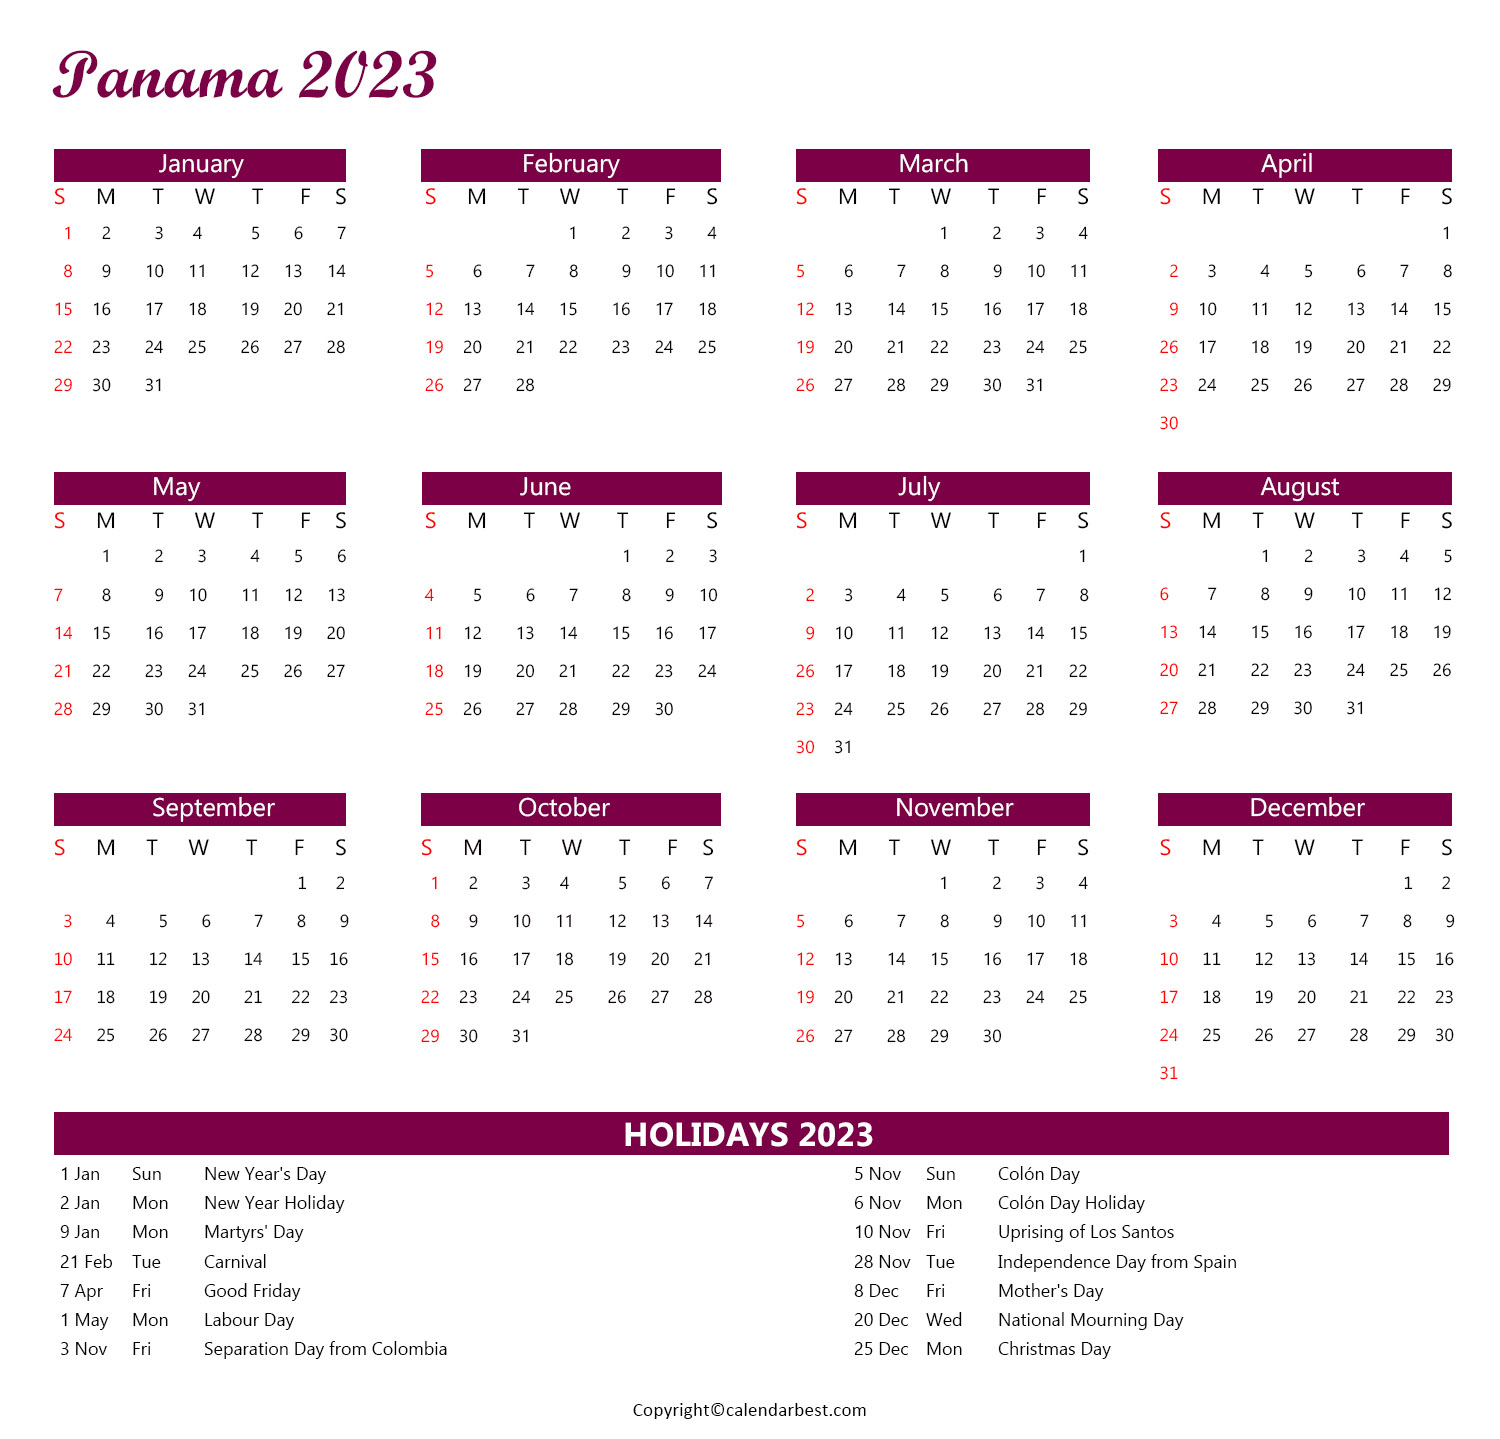 Panama Calendar 2023 with Holidays